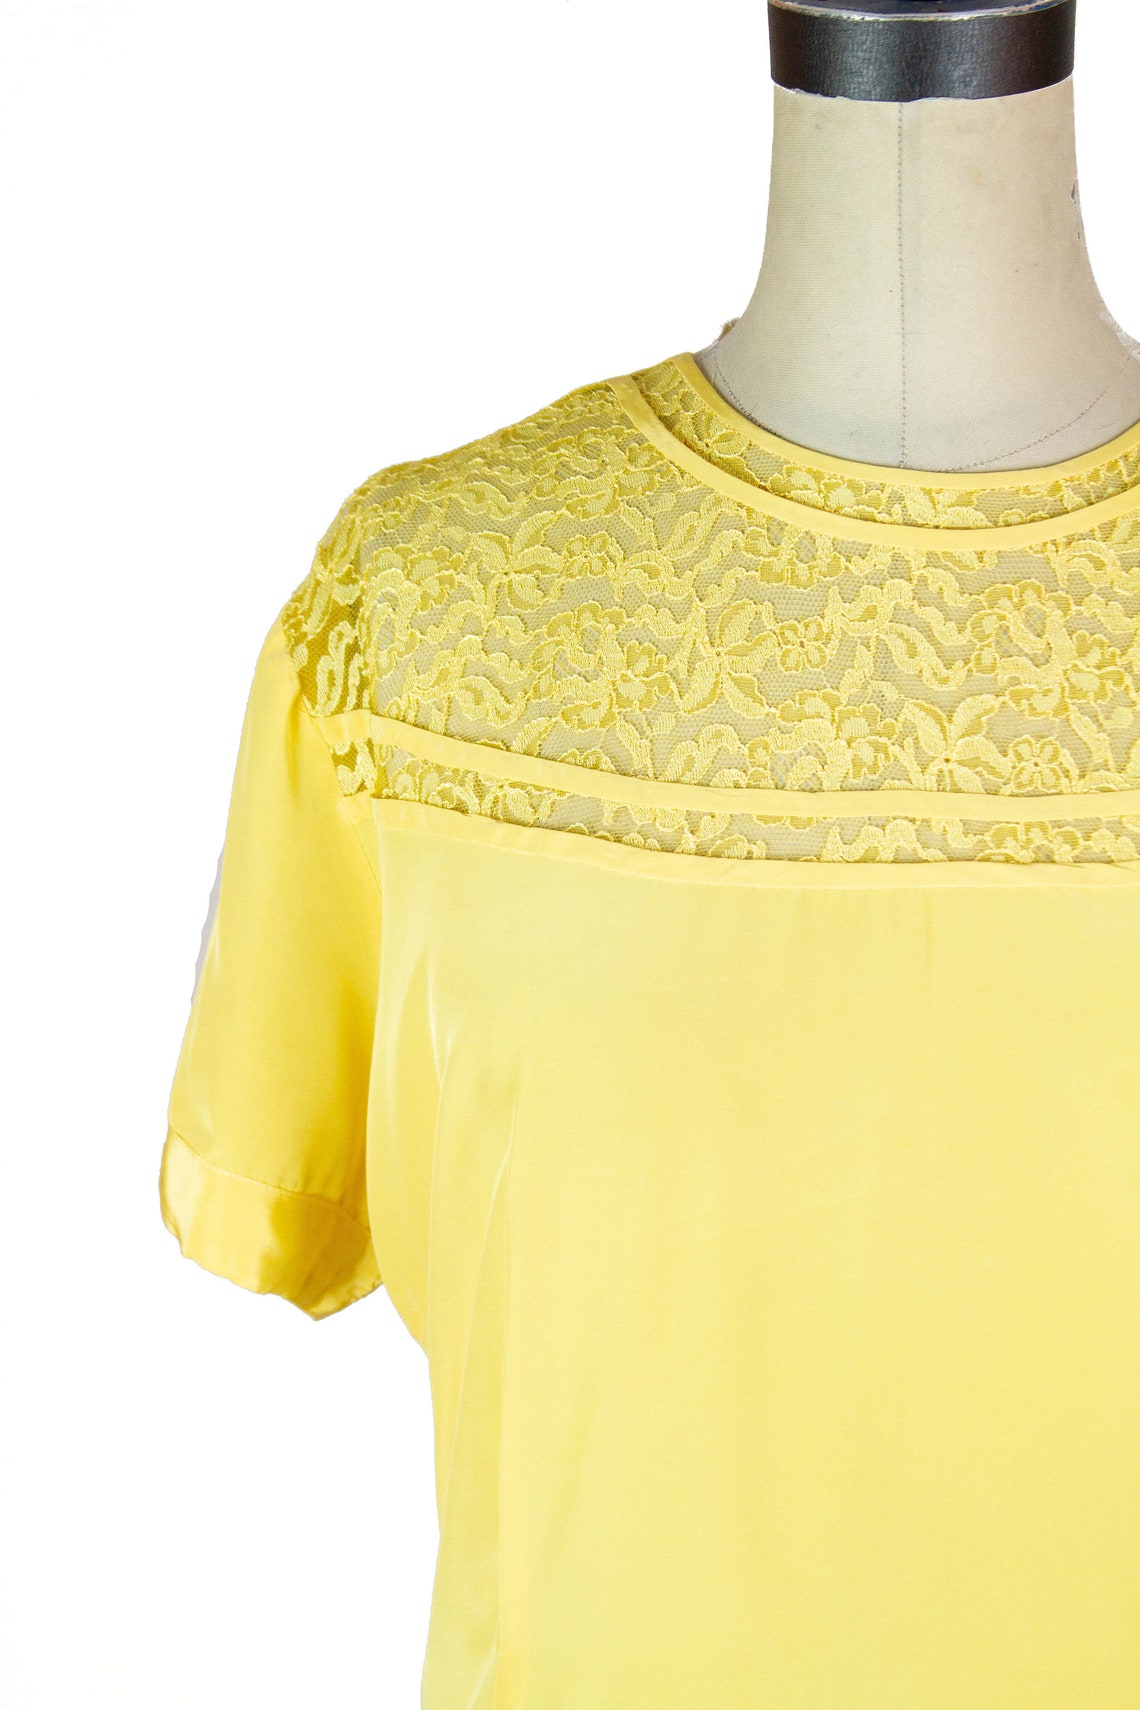 1940s Blouse Yellow Lace Yolk Short Sleeve Plus Size Blouse | Etsy